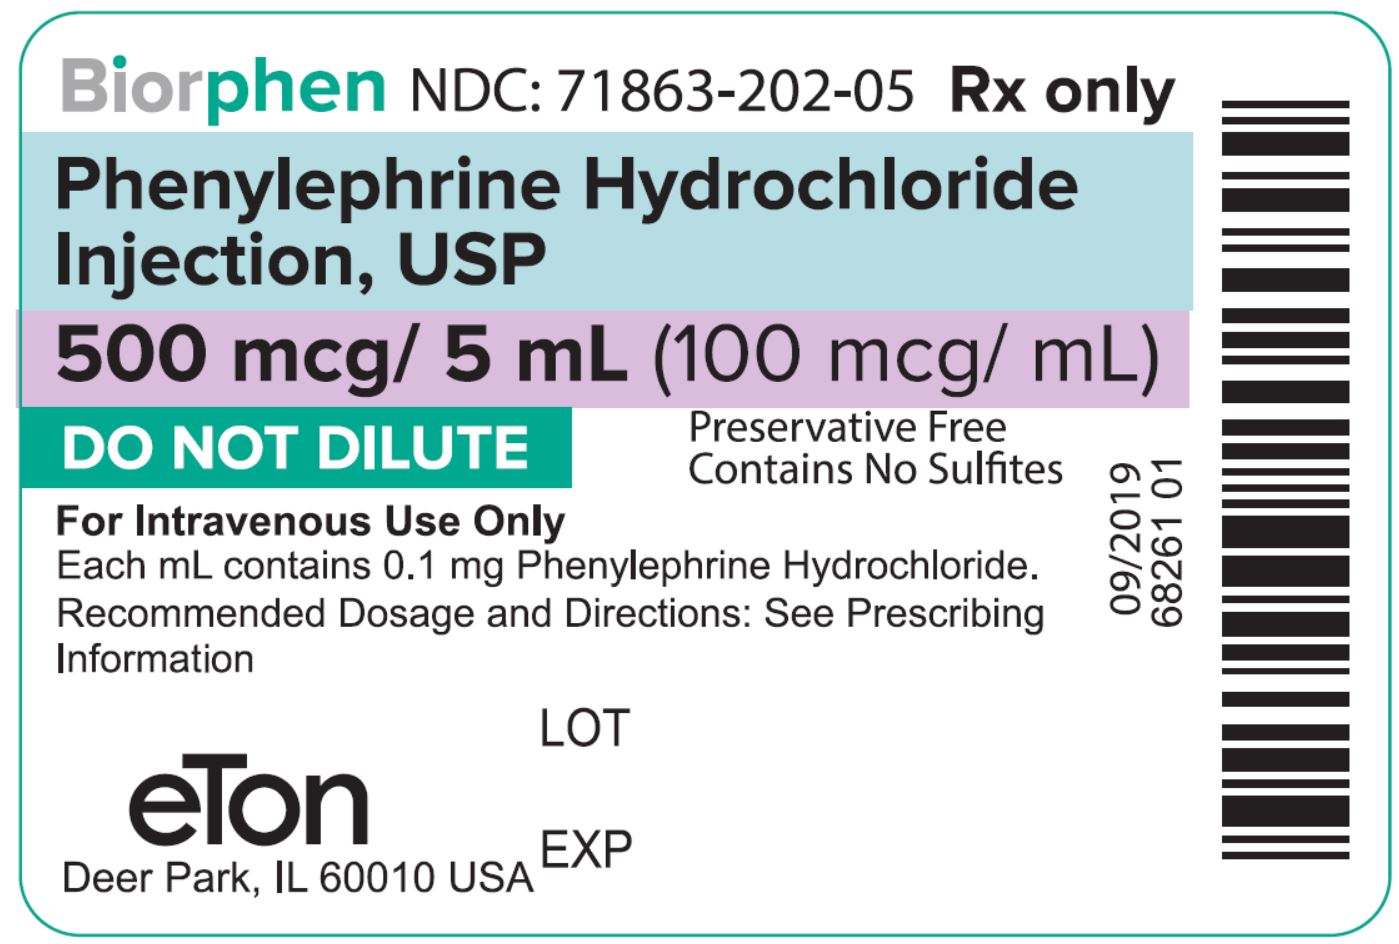 BIORPHEN (Phenylephrine Hydrochloride) Injection, USP 0.1 mg/ml Ampule Label - NDC 71863-202-05